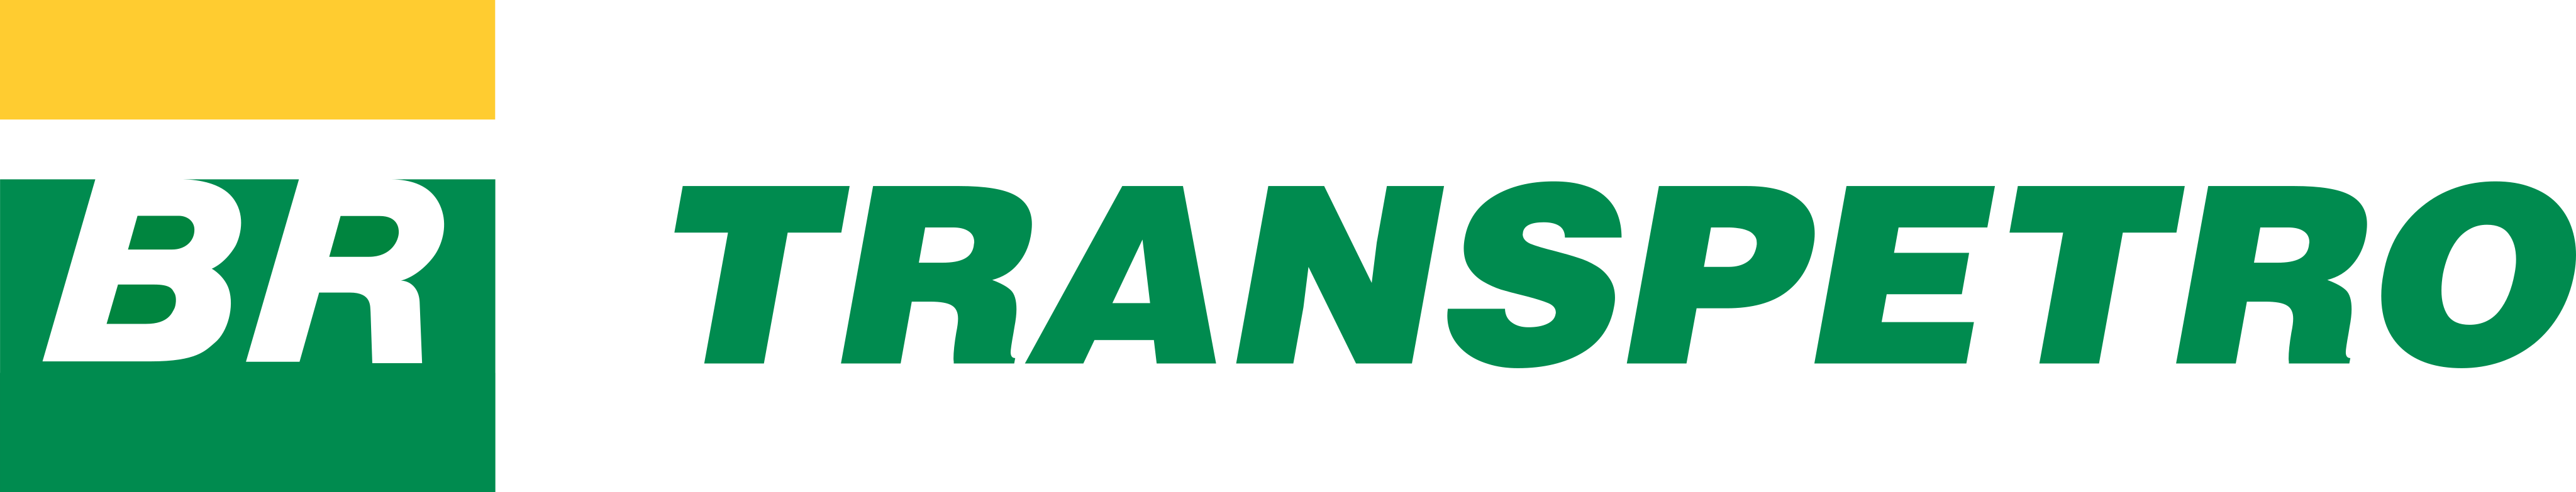 Transpetro Logo.